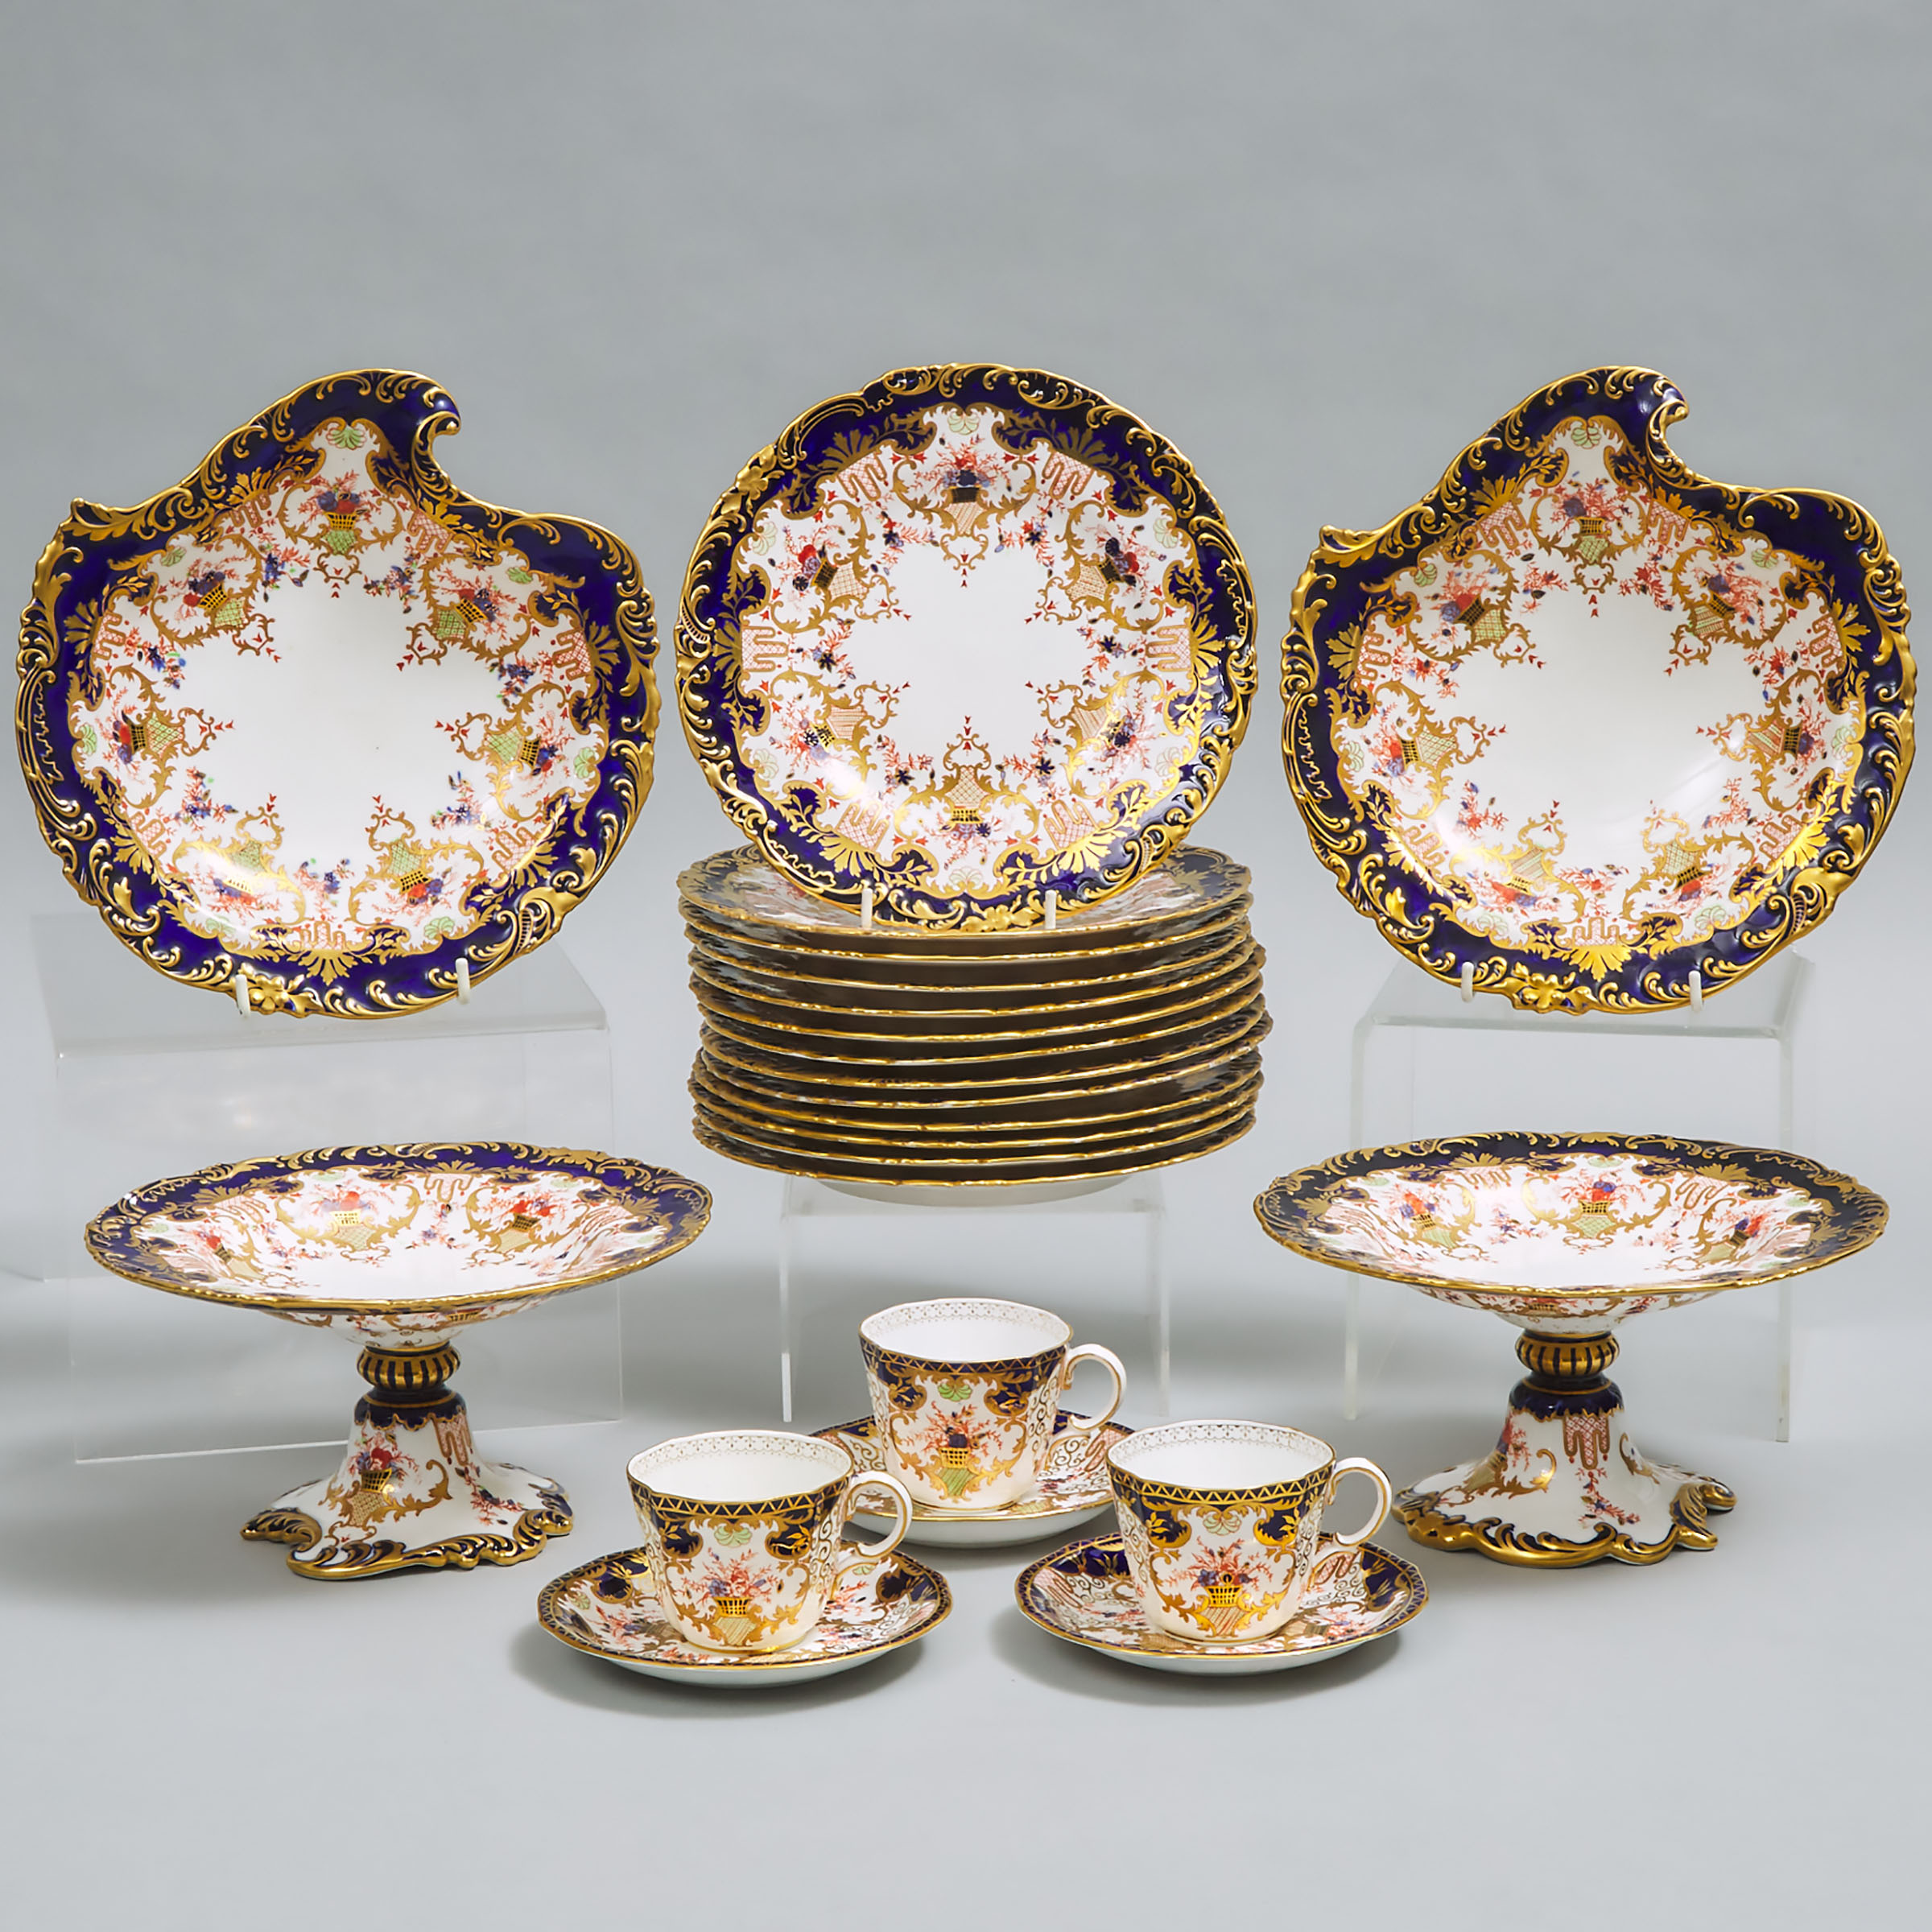 Royal Crown Derby 'Imari' (3707 and 3788) Pattern Dessert Service, 20th century